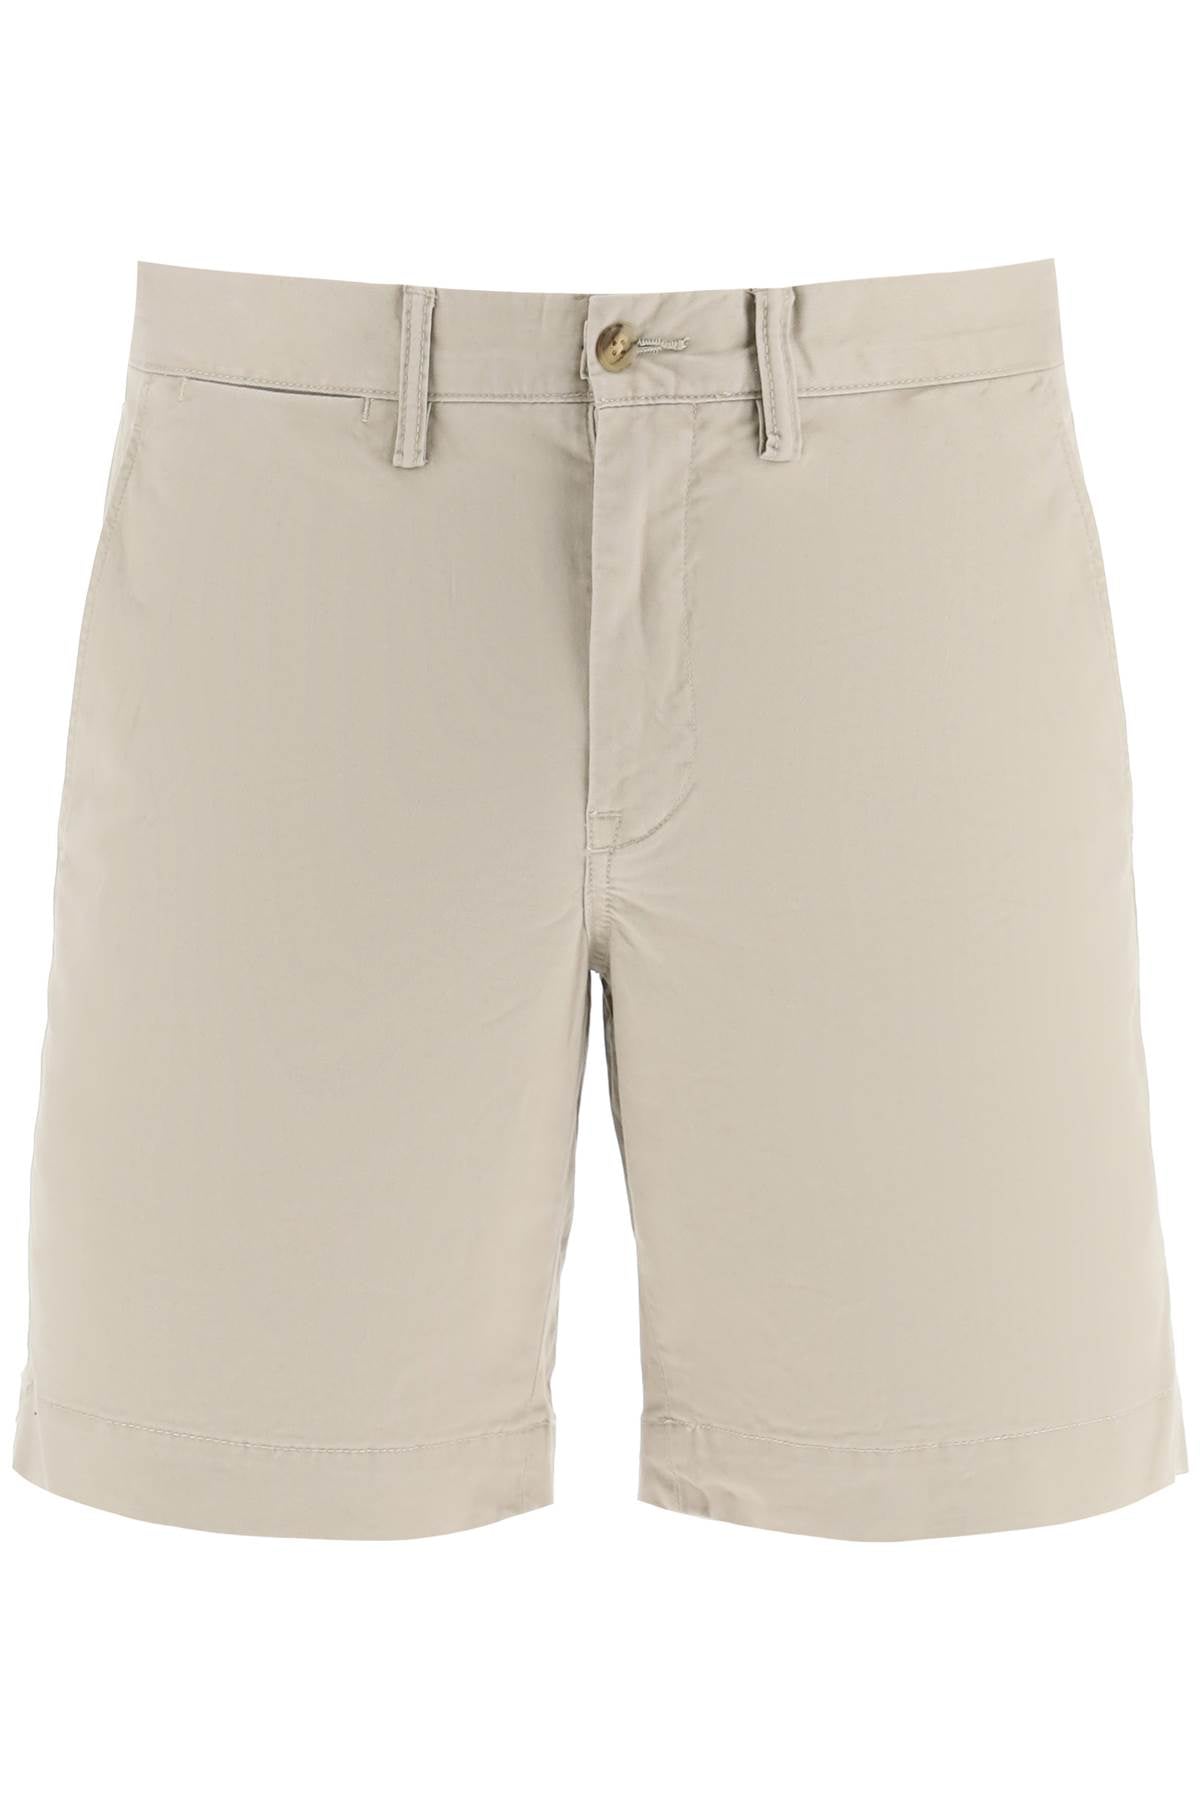 Polo ralph lauren stretch chino shorts-0